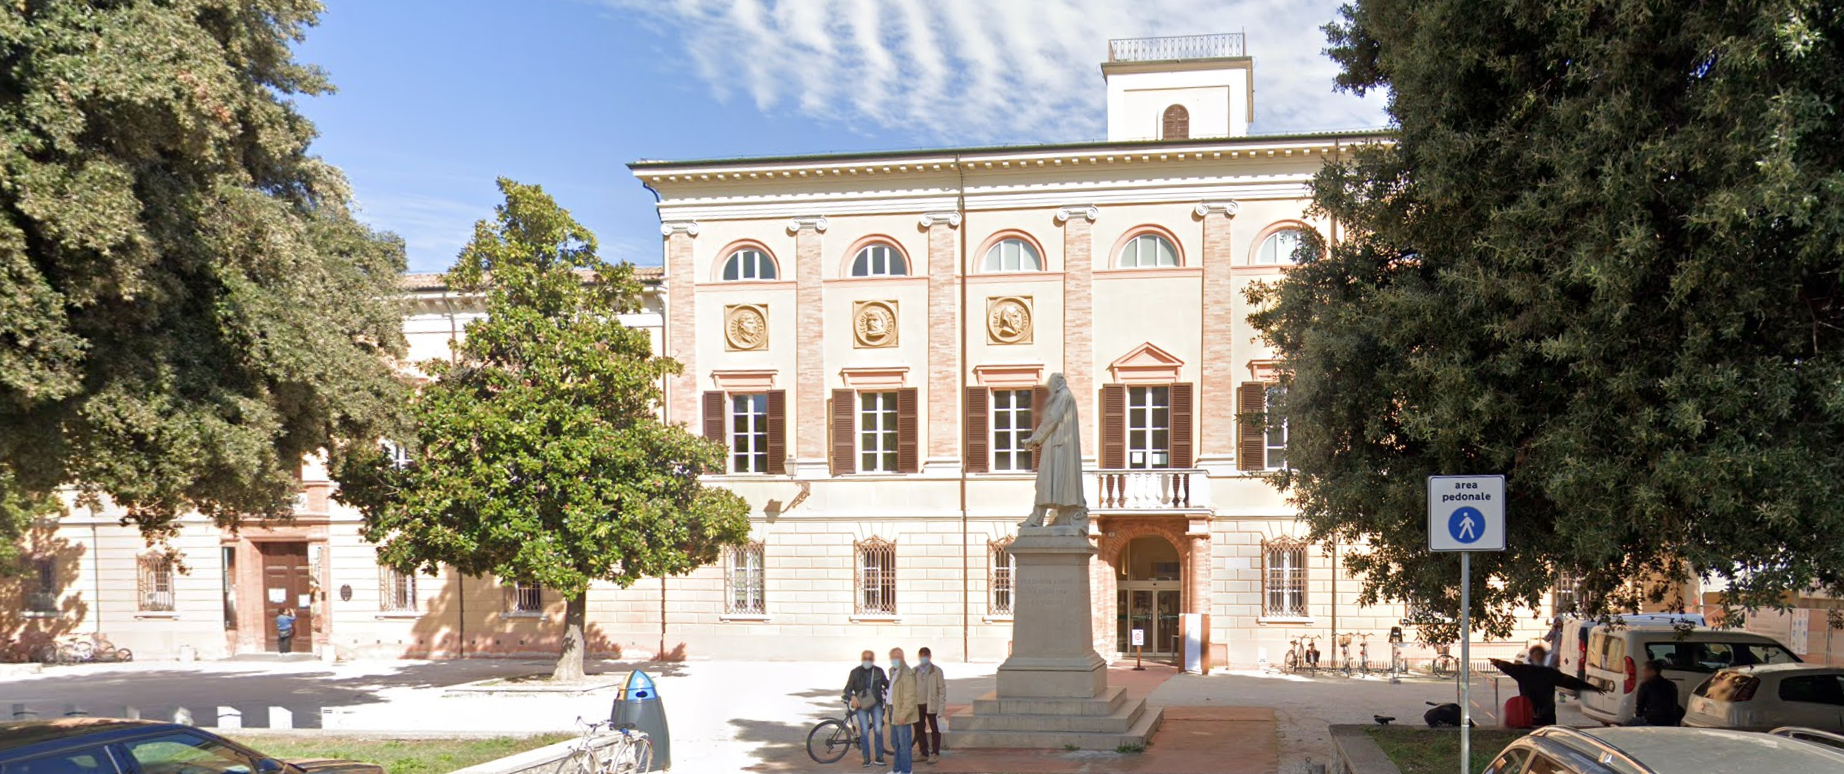 Biblioteca Malatestiana by Google Earth